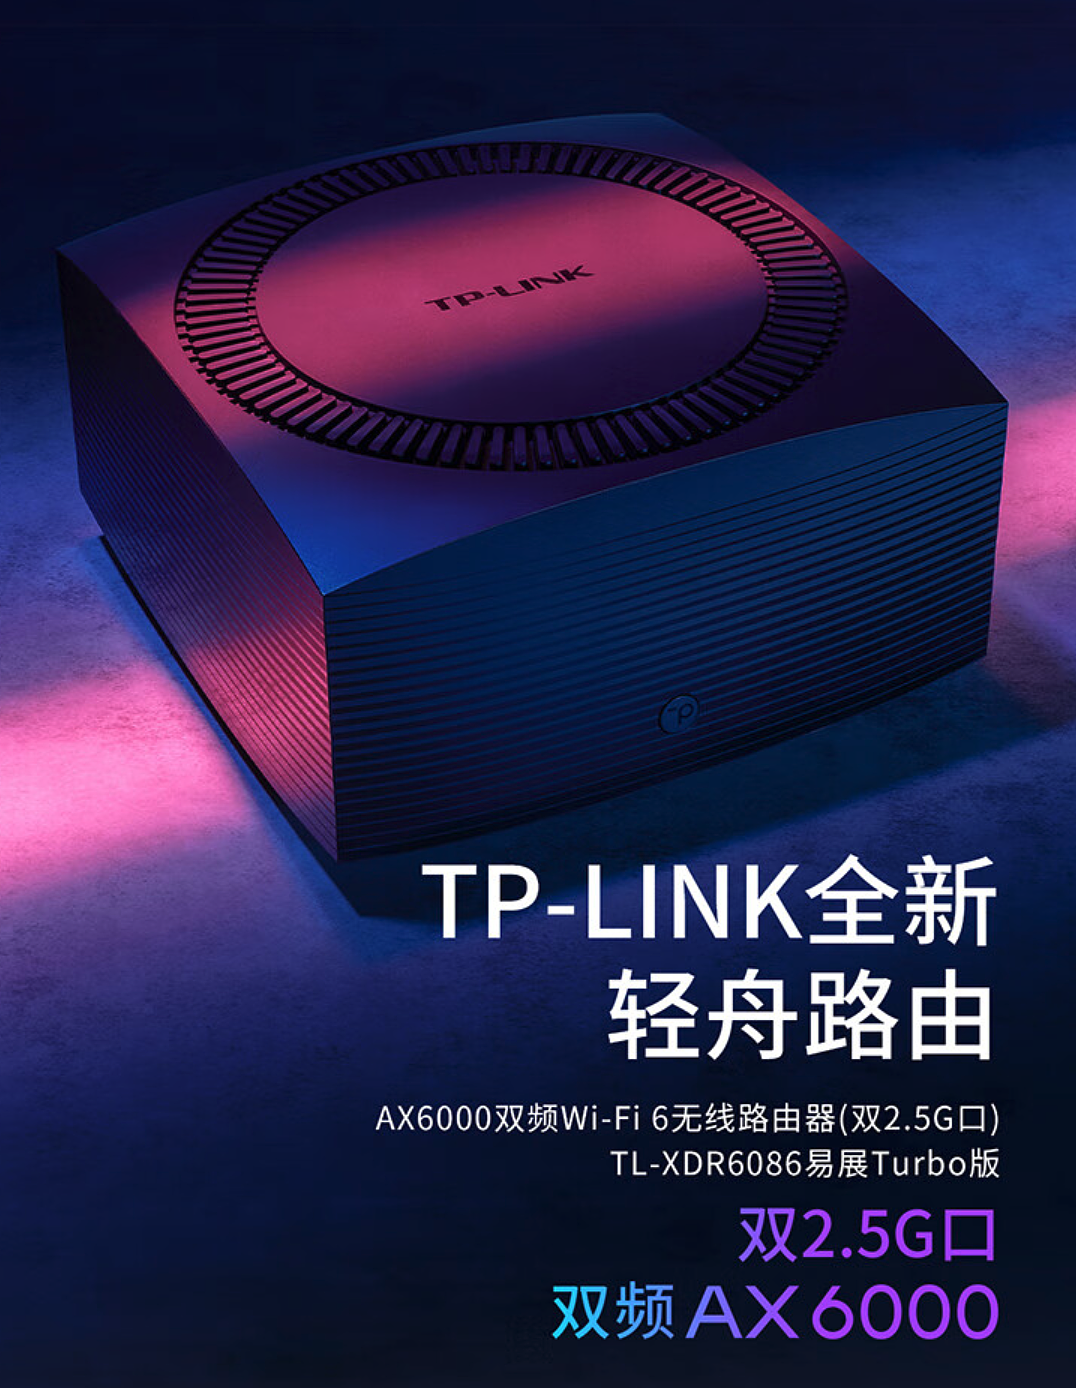 TP-LINK 上架新款轻舟路由器 AX6000，首发 789 元 - 1